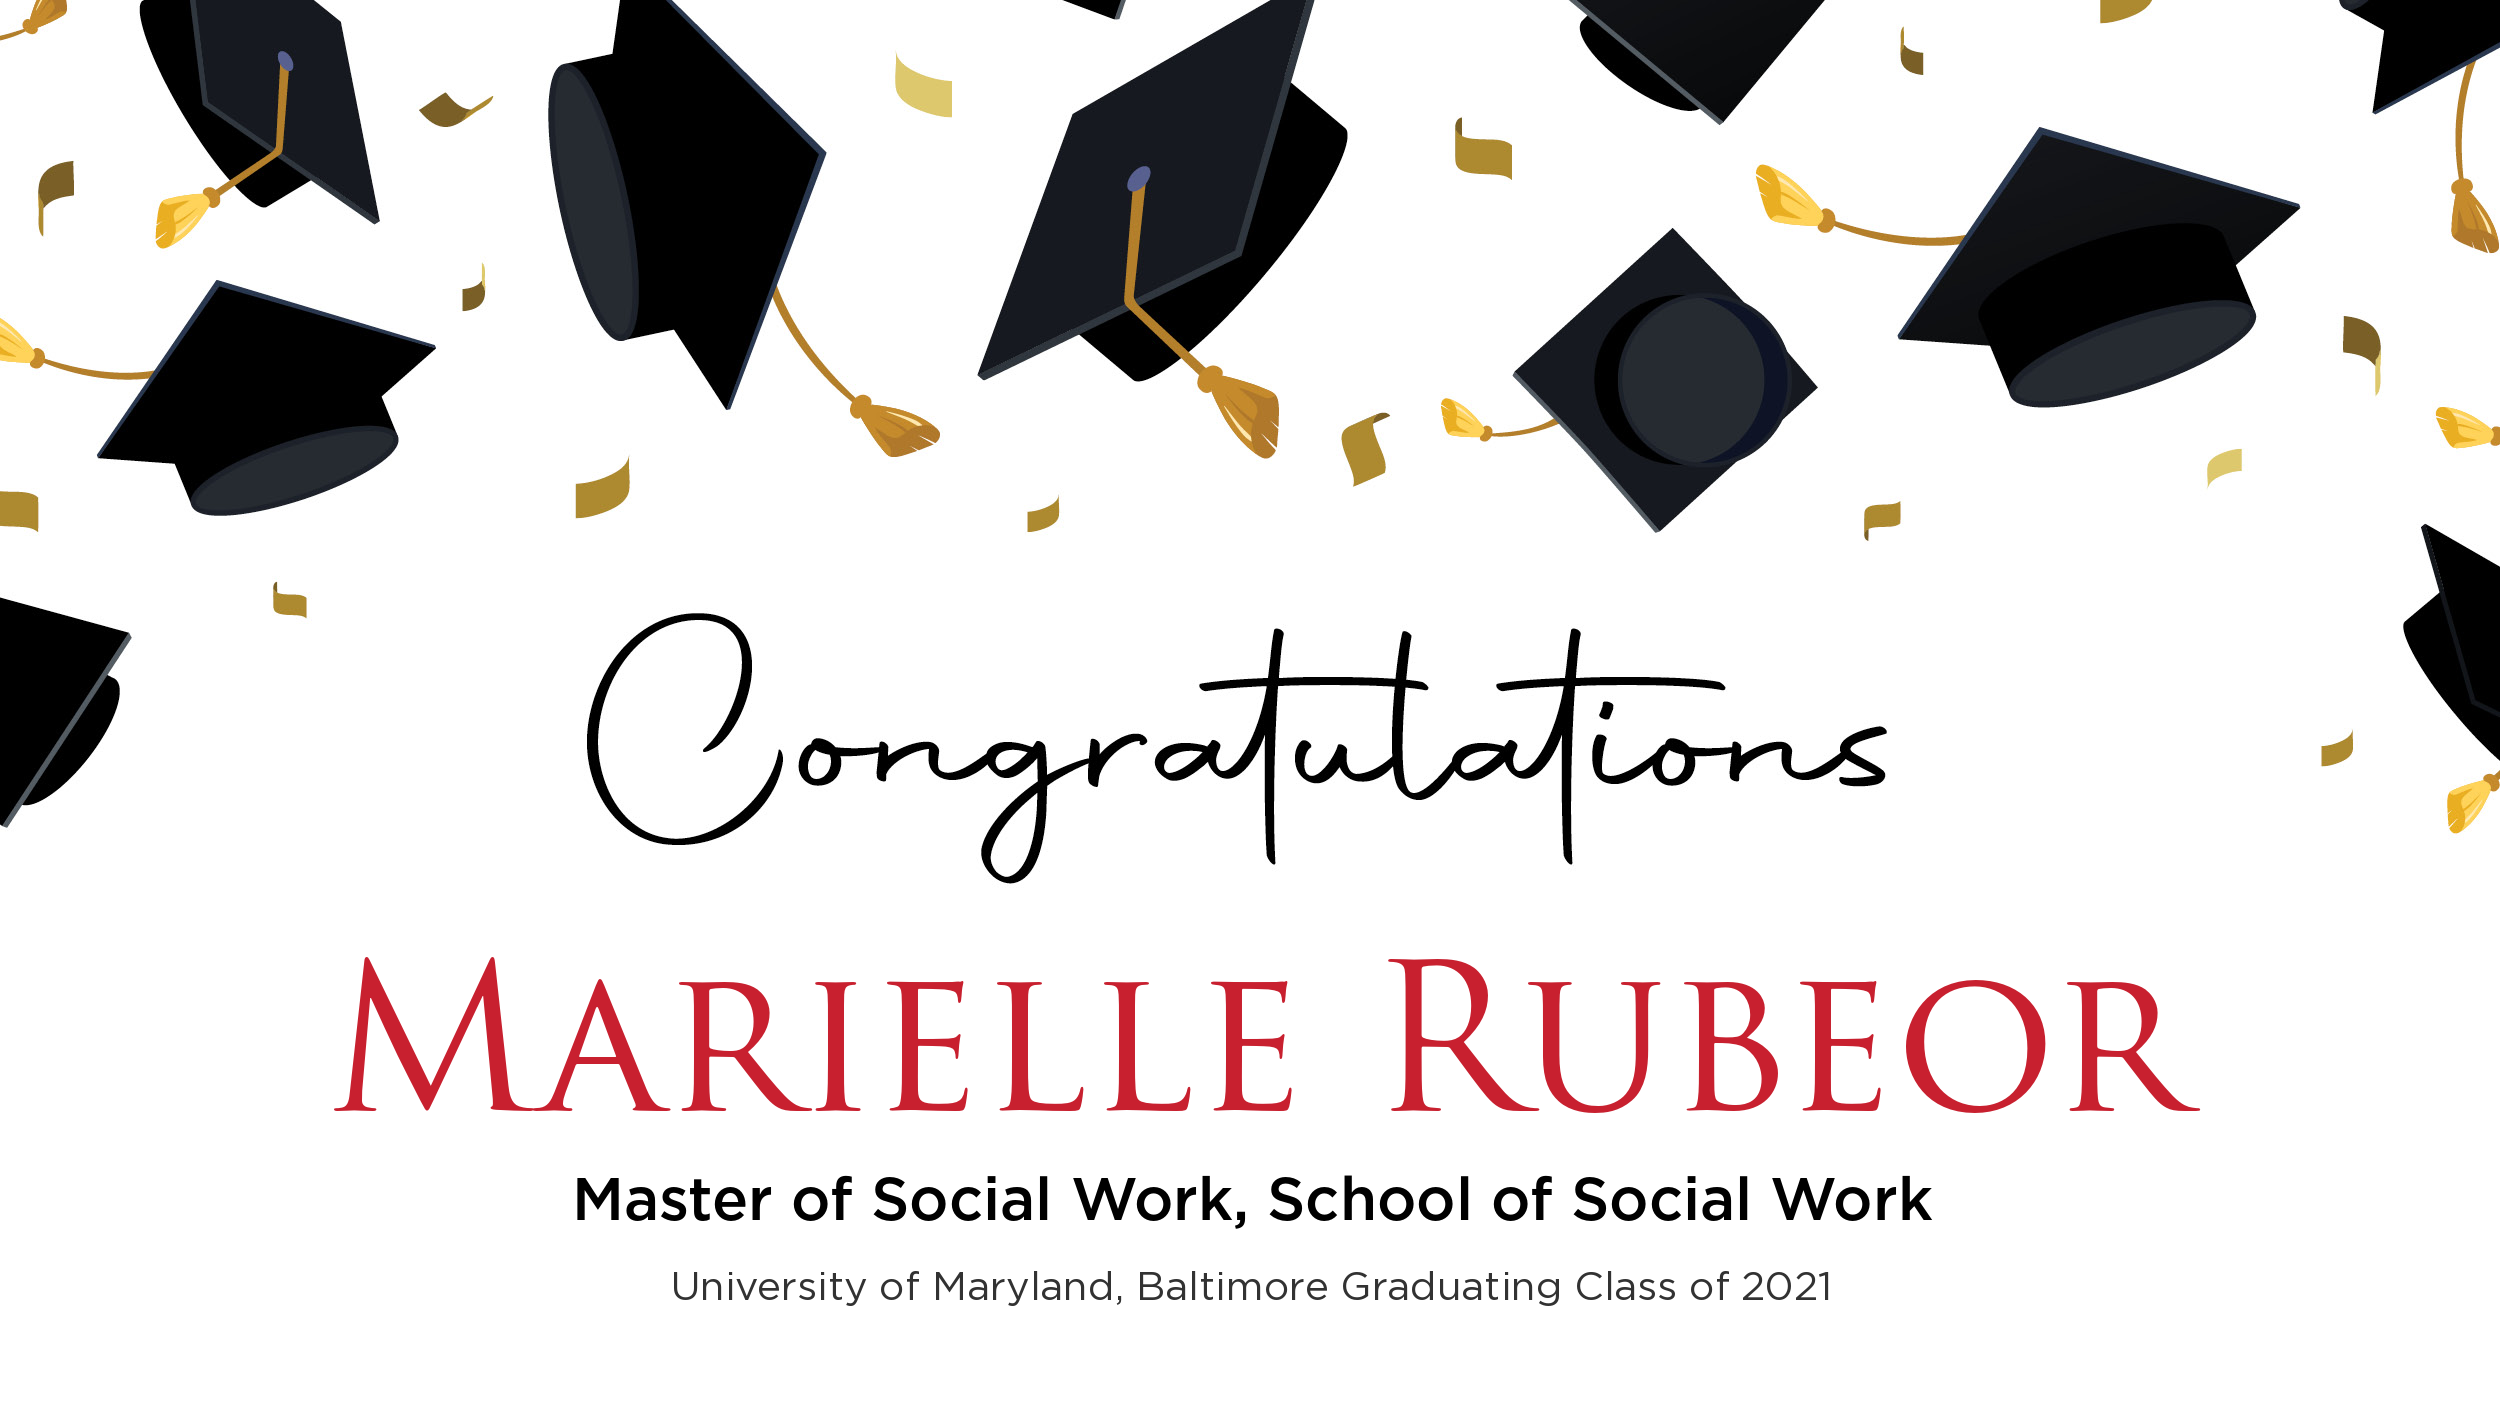 Congratulations Marielle Rubeor, Master of Social Work